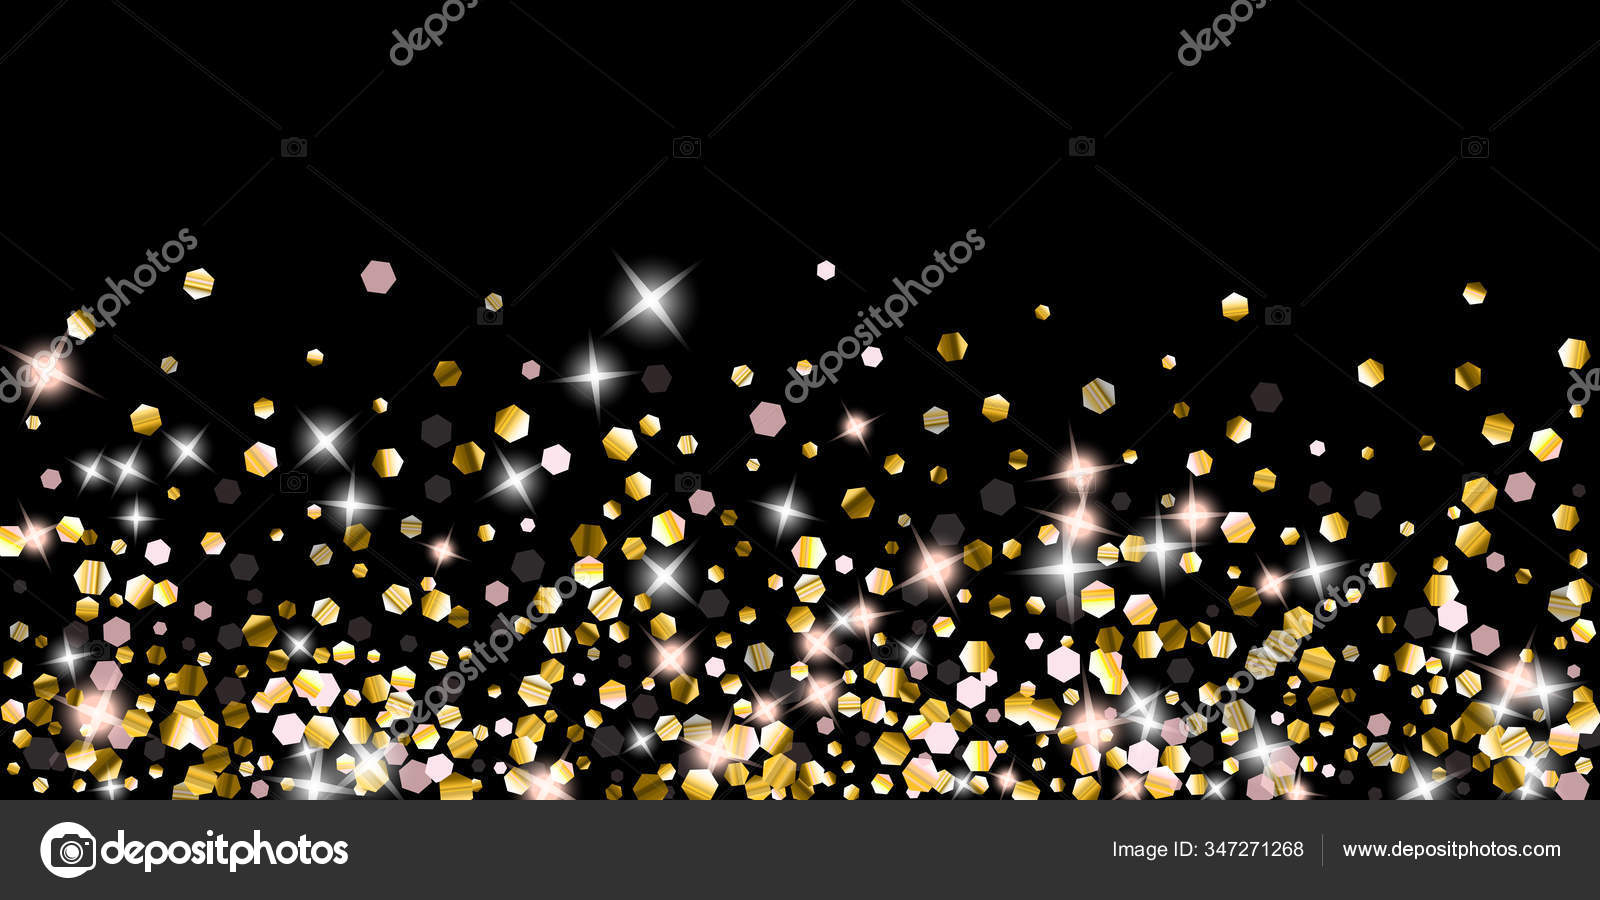 Buy Black Gold Shiny Bokeh Stars Glitter Party Backdrop for